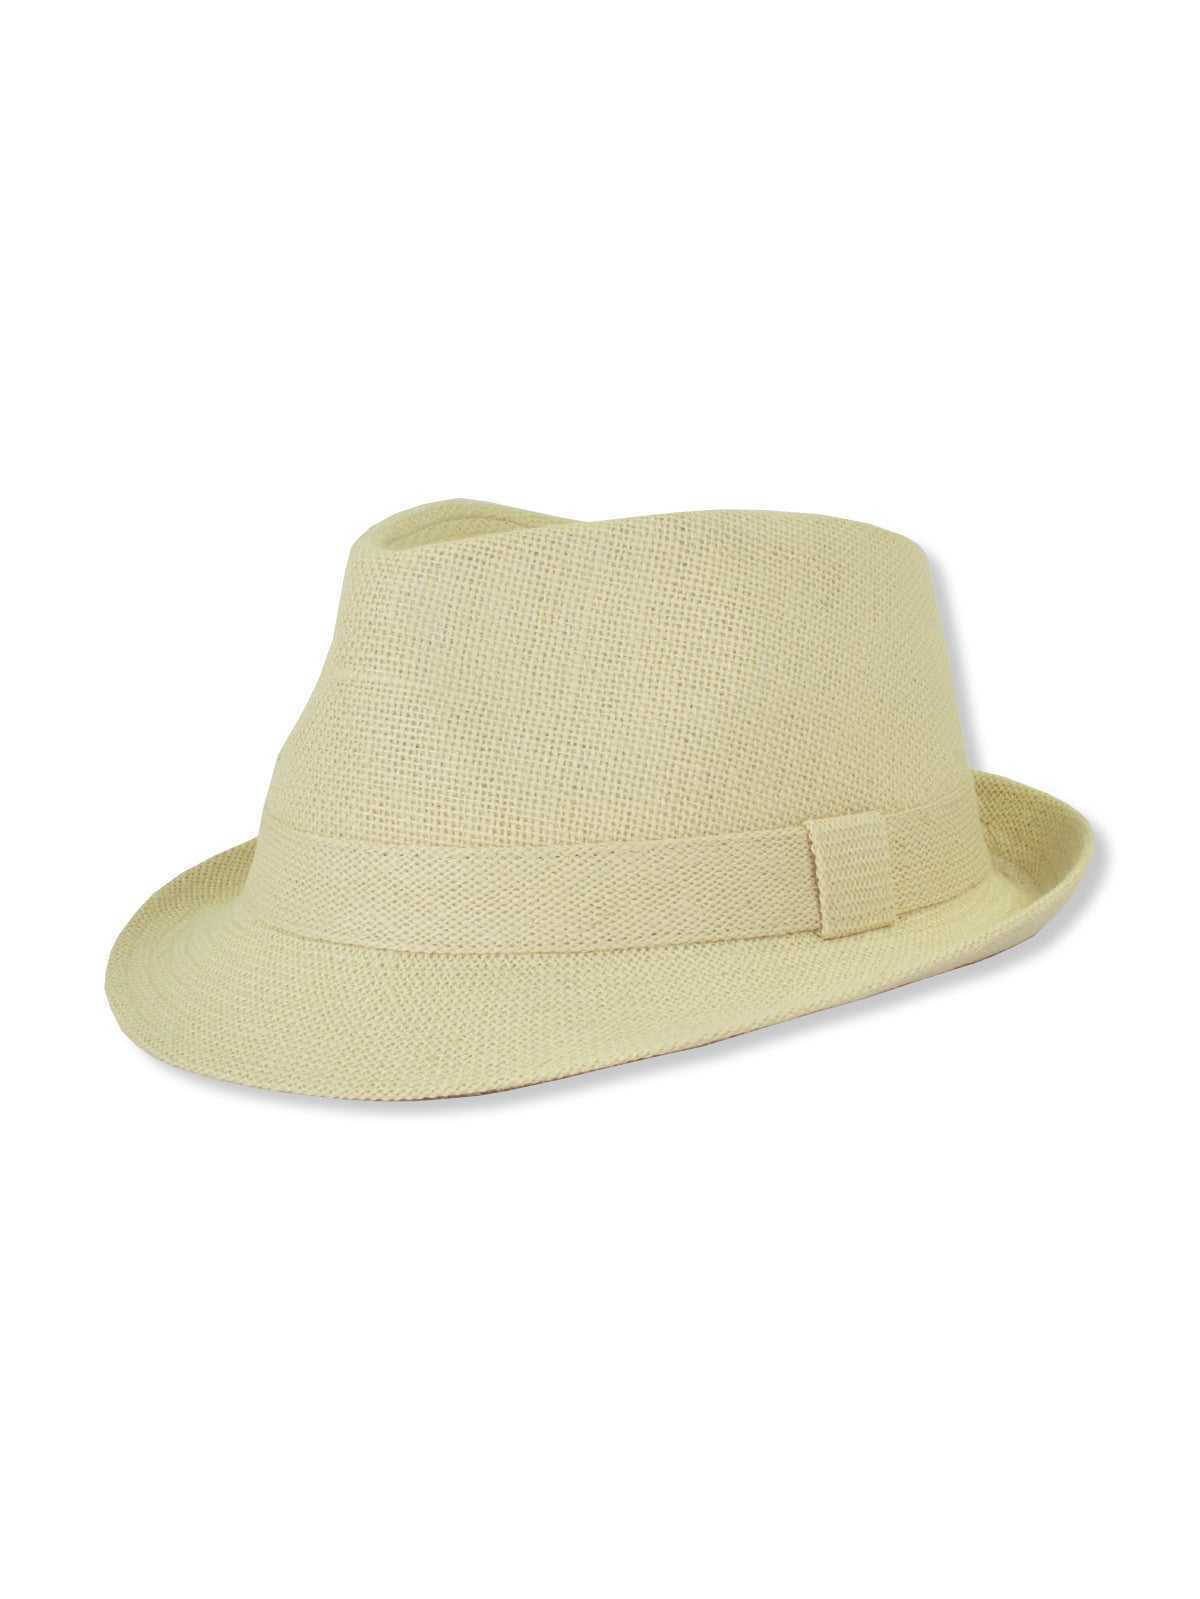 Dobbs 'Urban' 100% Linen Fedora Hats SCURBNWTD14 - 0